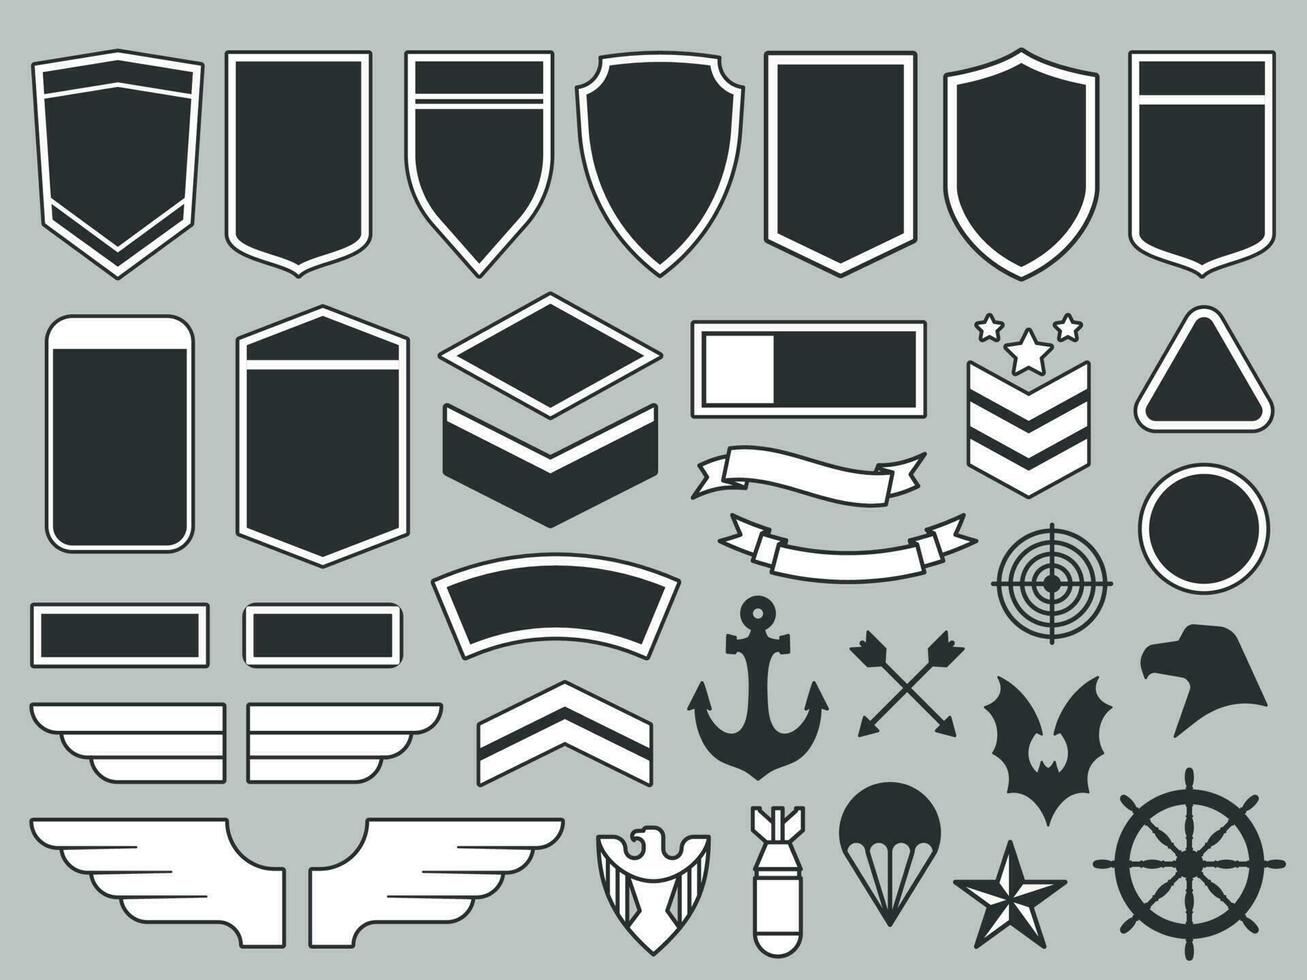 leger lappen. leger soldaat embleem, troepen badges en lucht dwingen insigne lap ontwerp elementen vector reeks